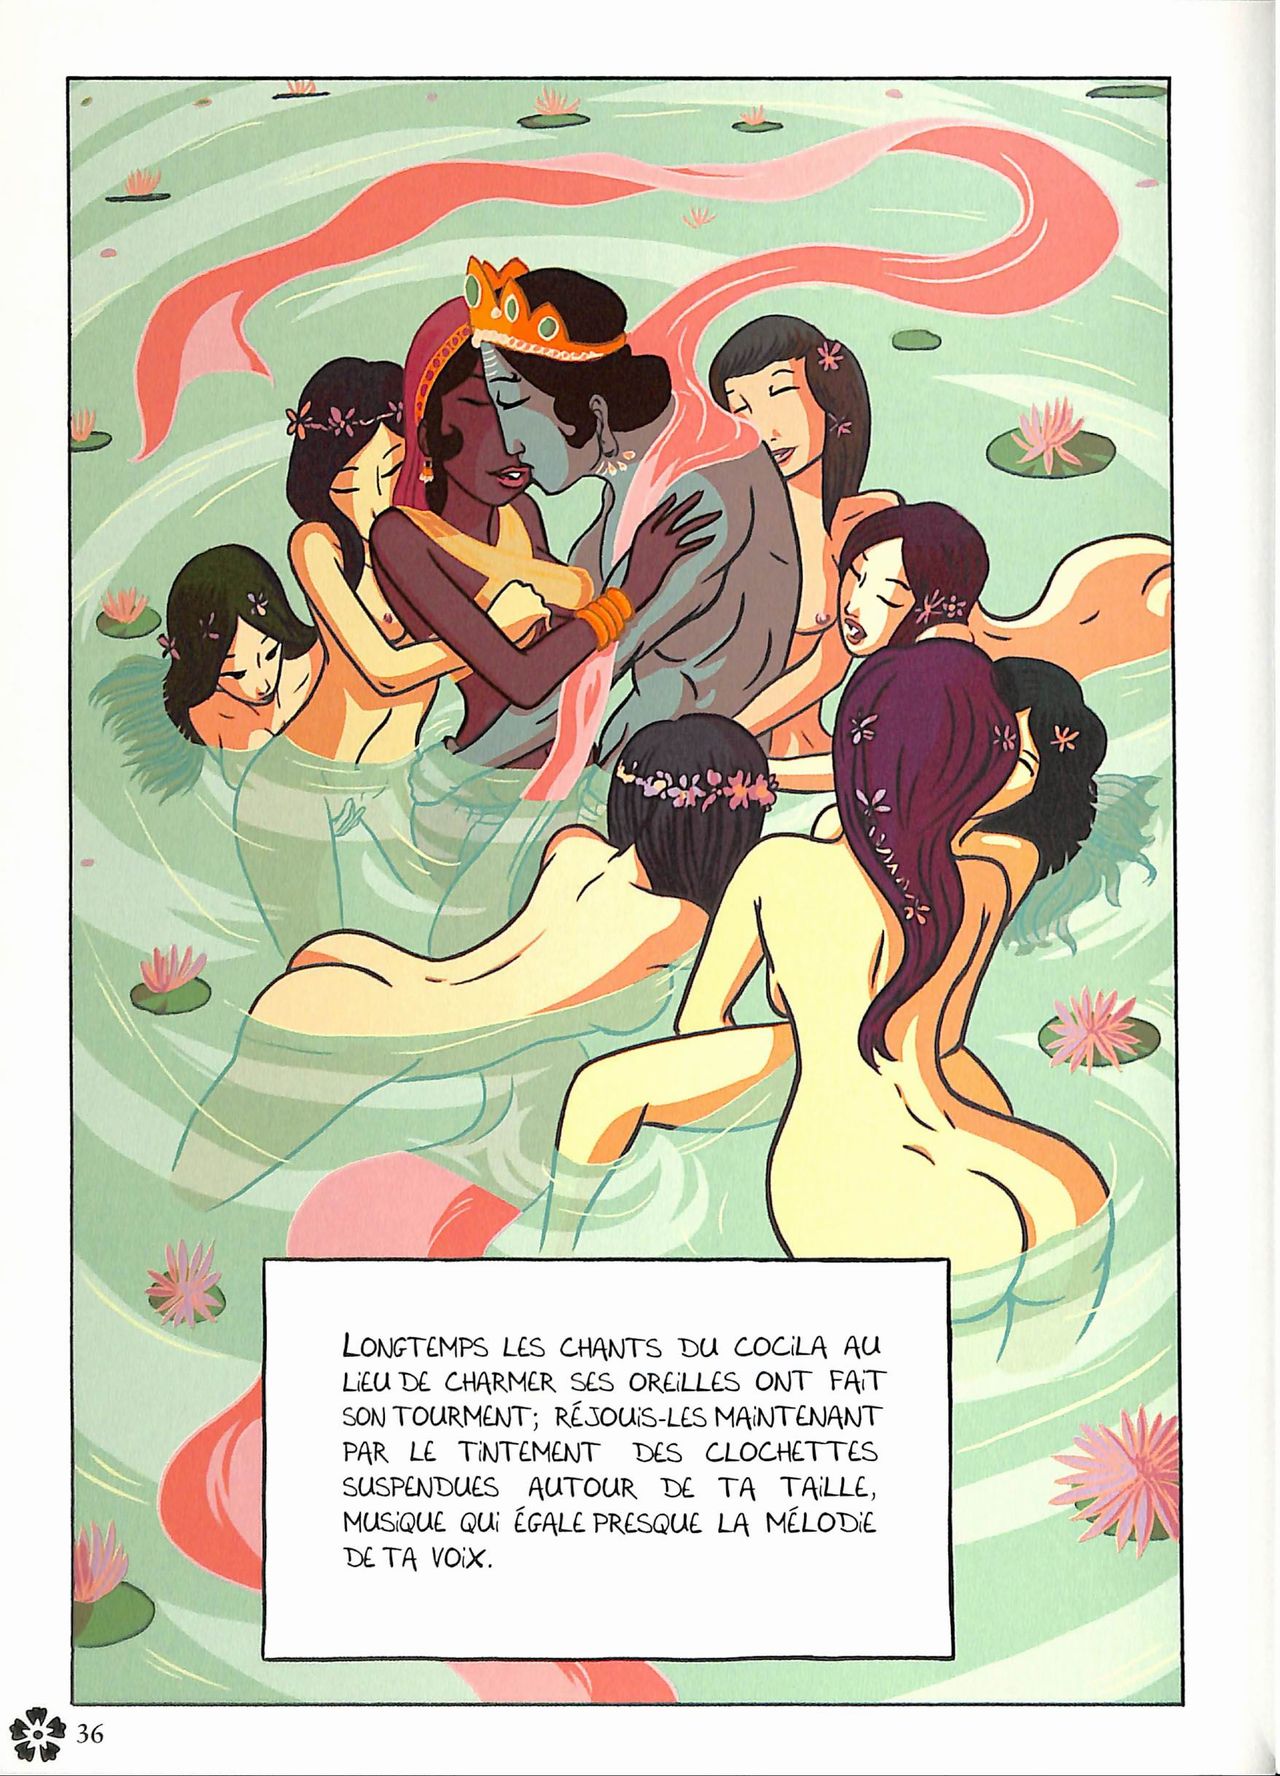 Kama Sutra en bandes dessinées - Kama Sutra with Comics numero d'image 37